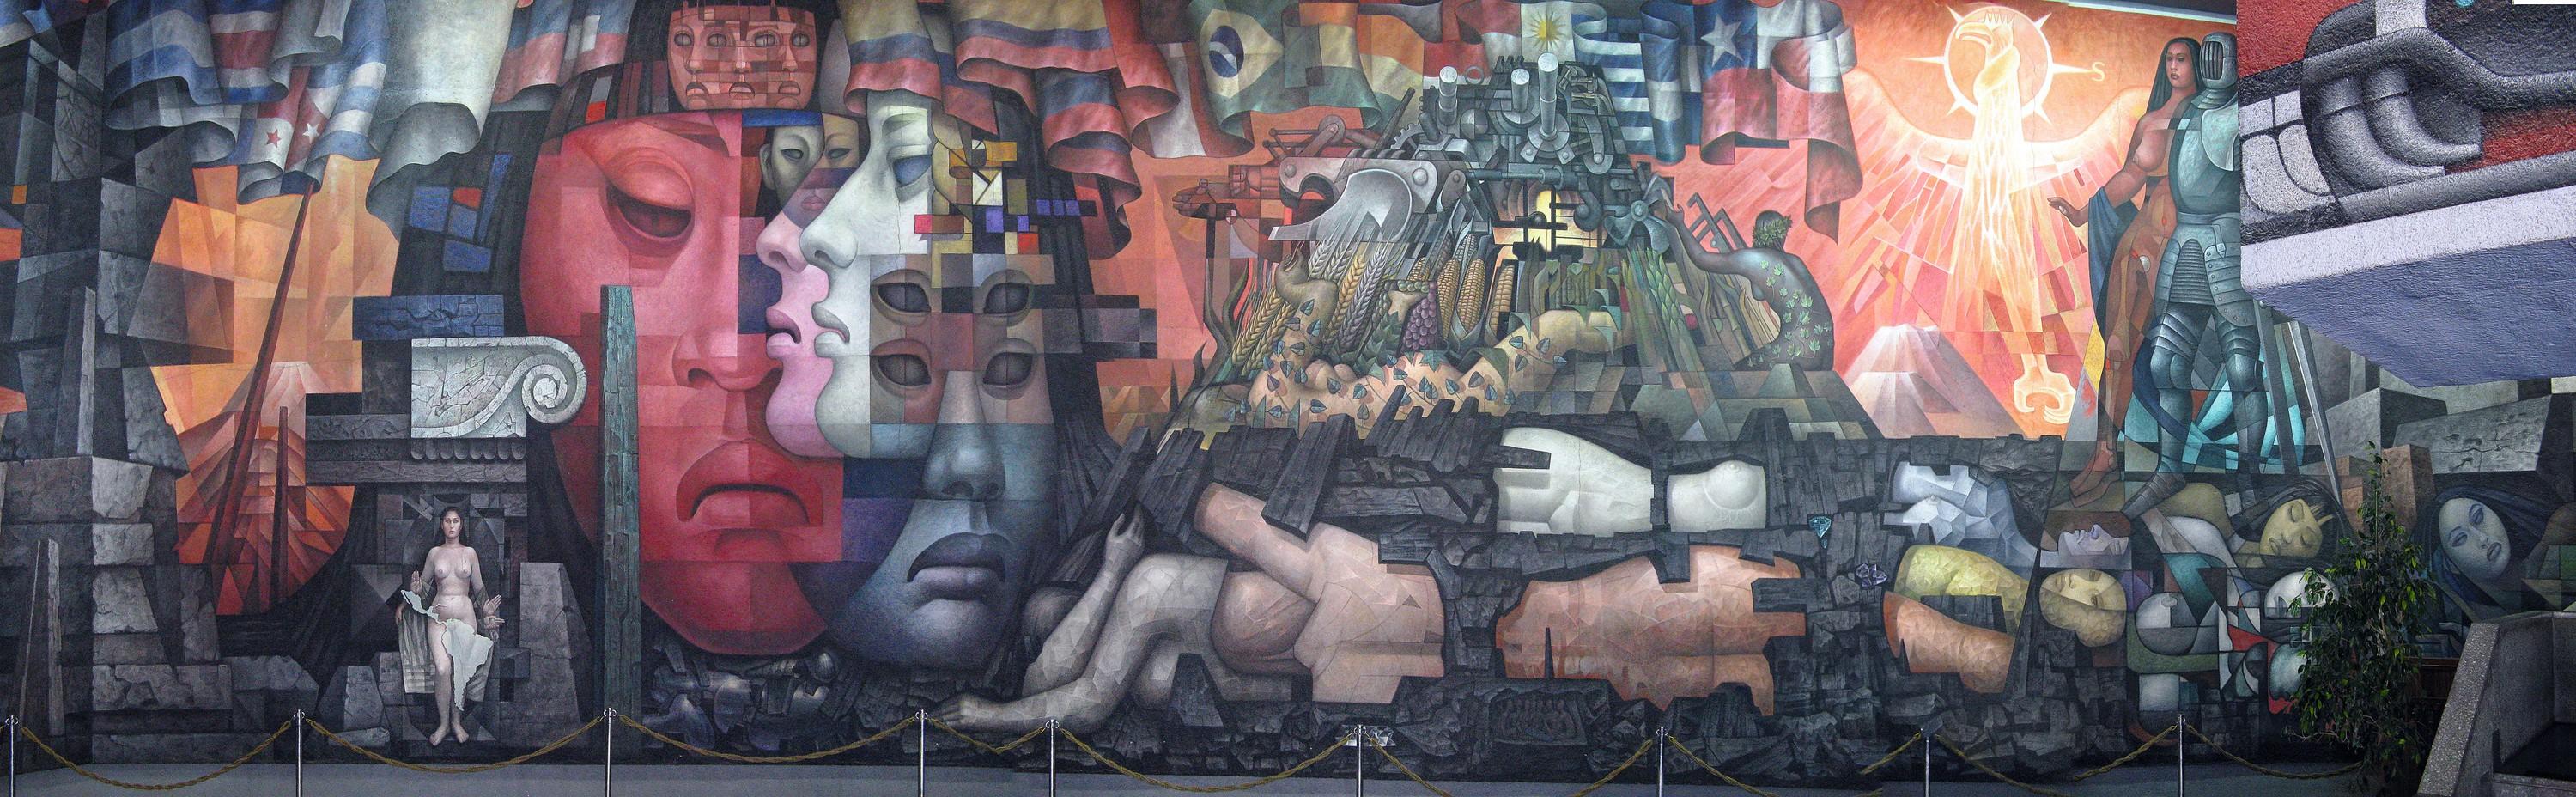 Jorge González Camarena, panorámica del mural <i>Presencia de América Latina</i>, Chile, 1964 1965.